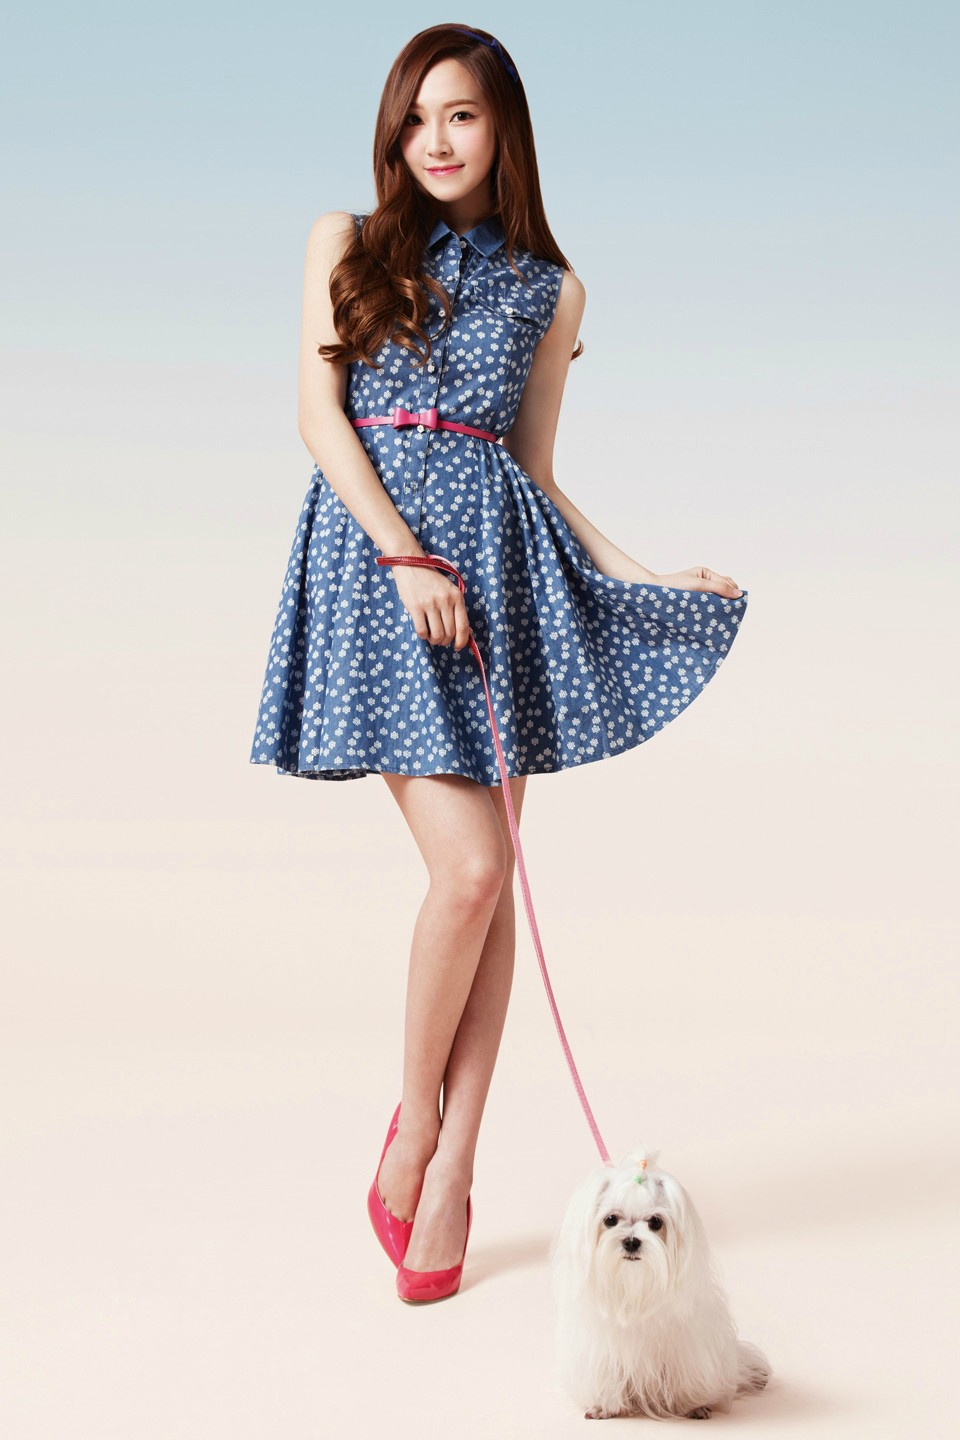 twenty2 blog: Girls' Generation's Jessica for Soup Fall/Winter 2014 Ad ...